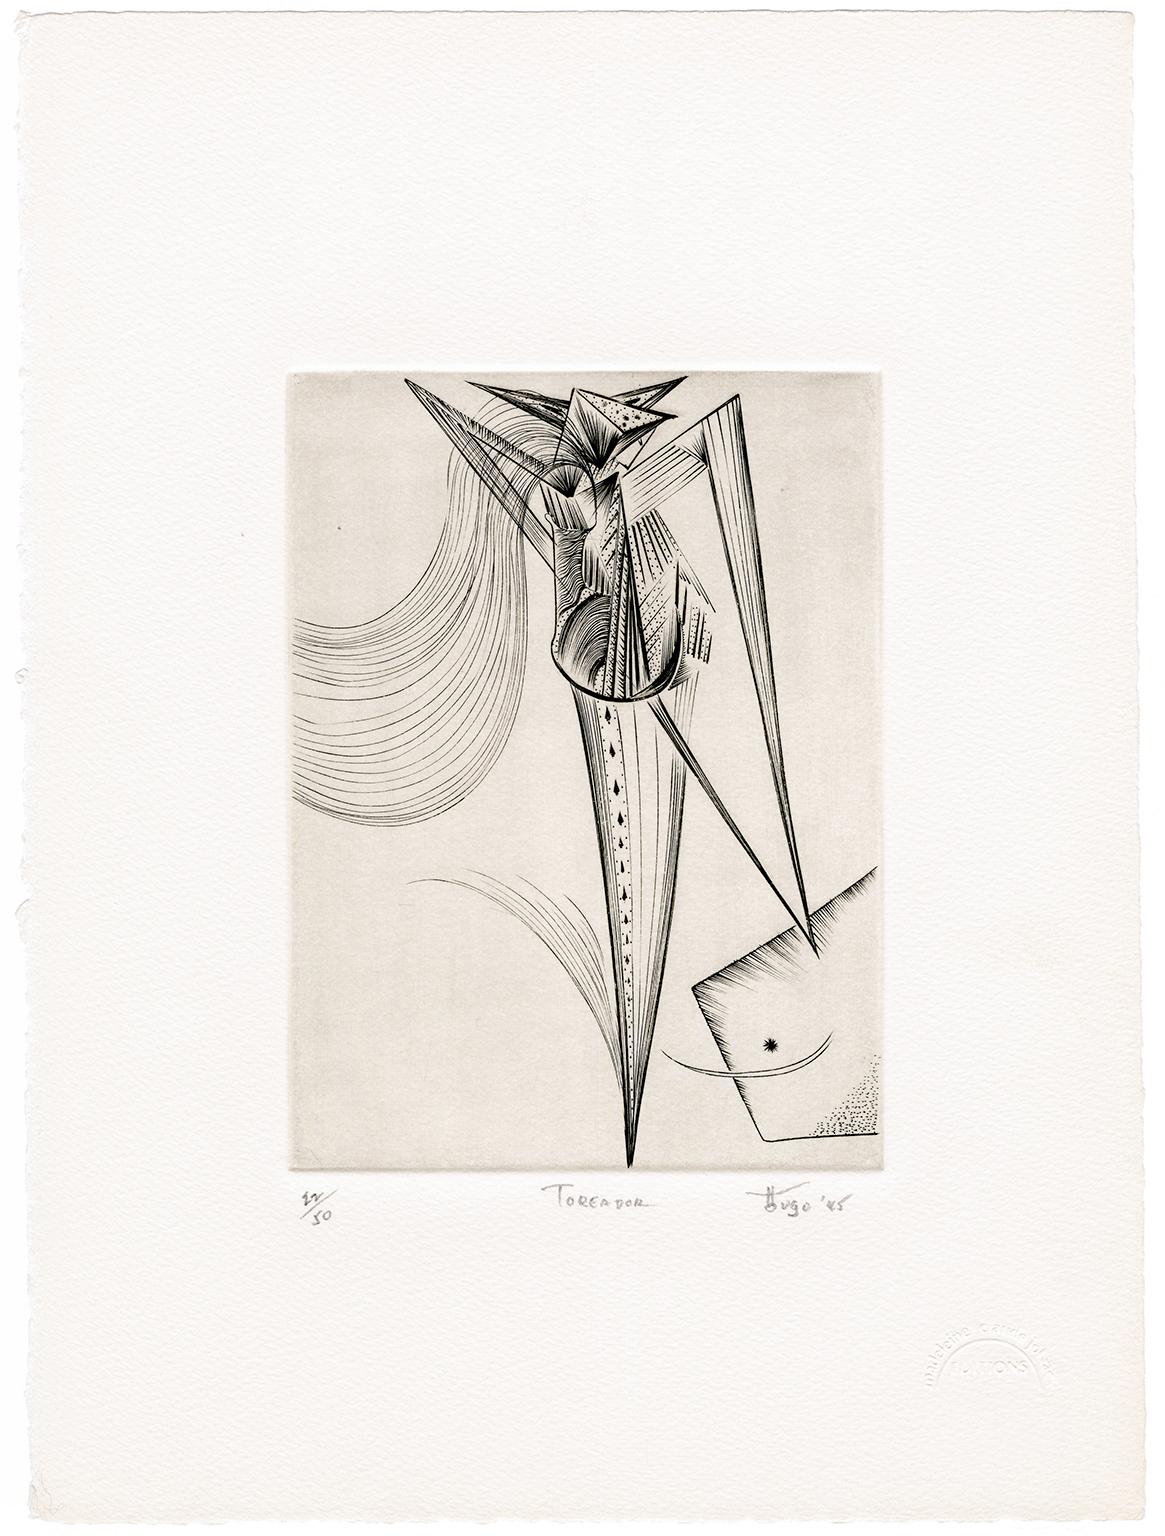 'Toreador' – Mid-Century Surrealism, Atelier 17 - Print by Ian Hugo